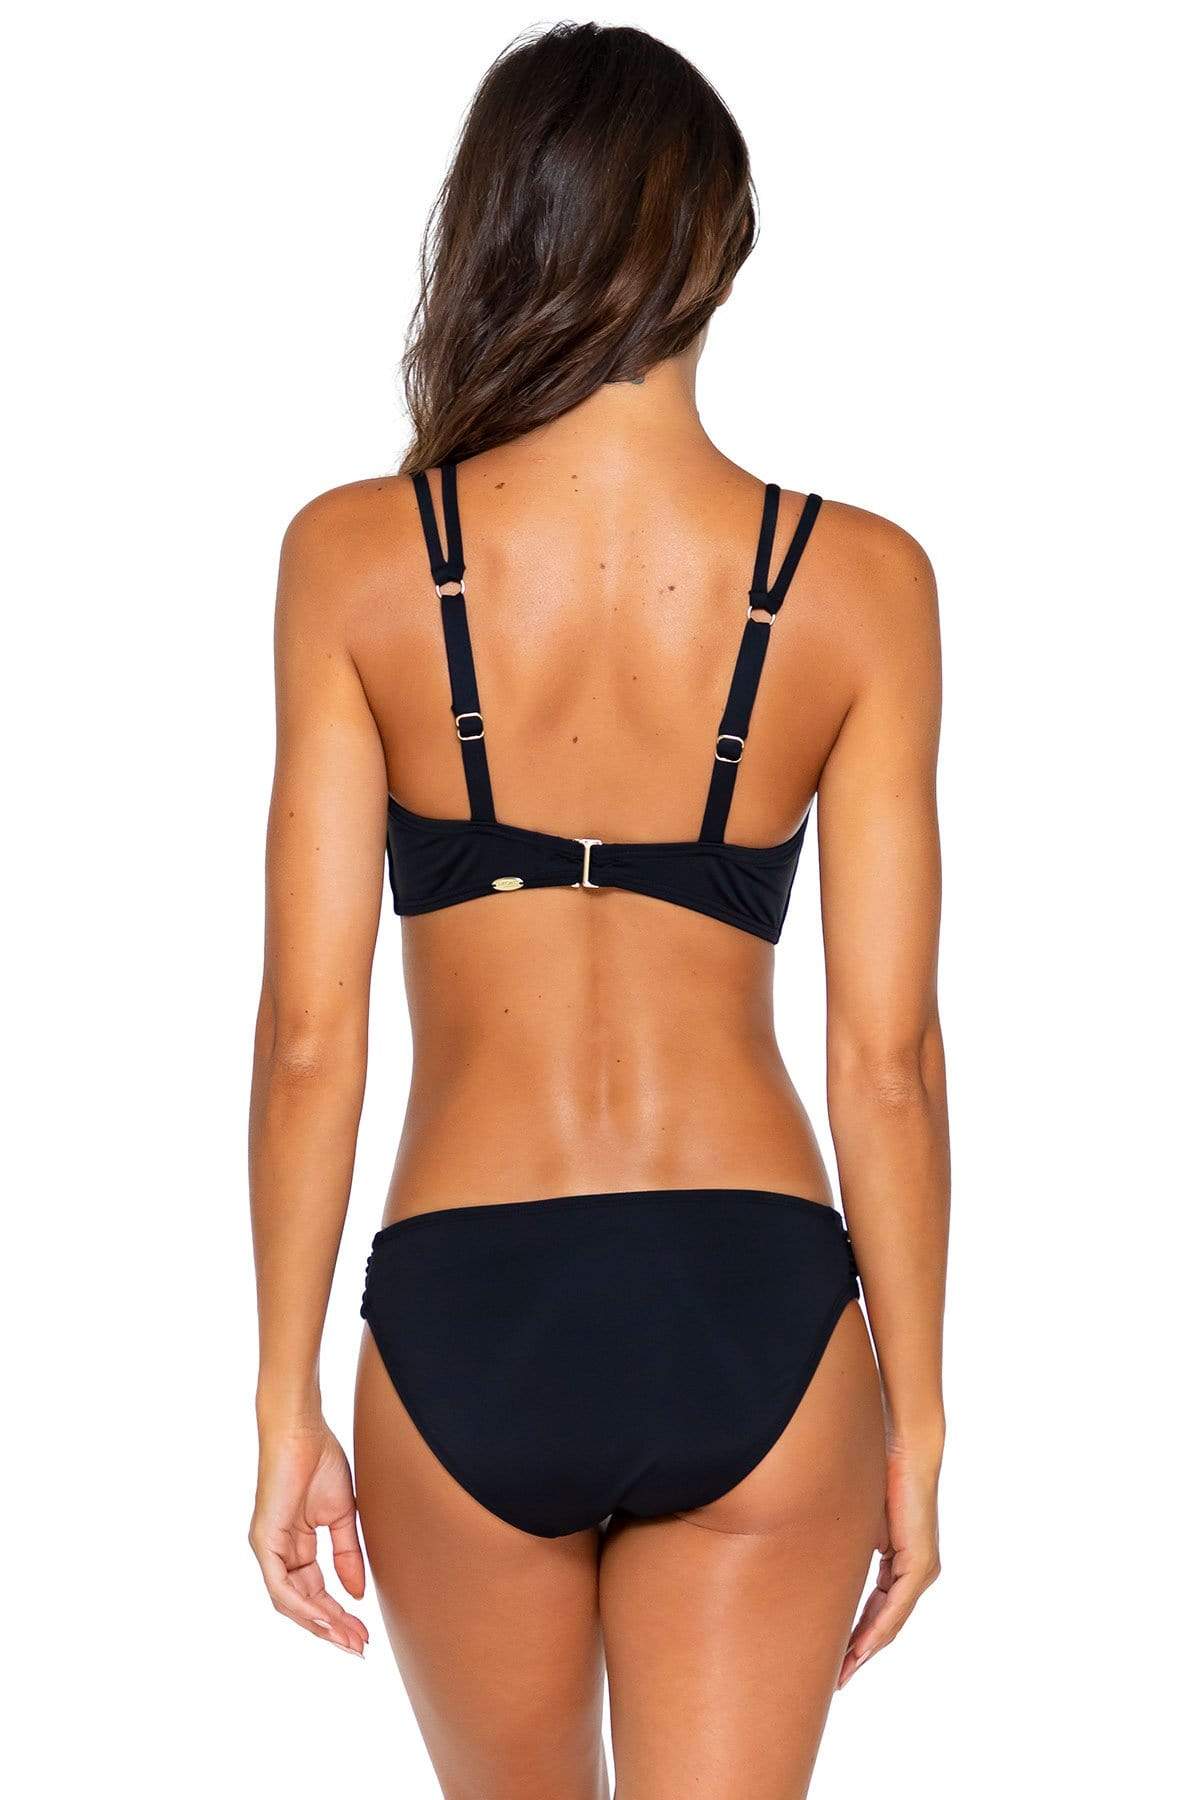 Bestswimwear -  Sunsets Black Taylor Bralette